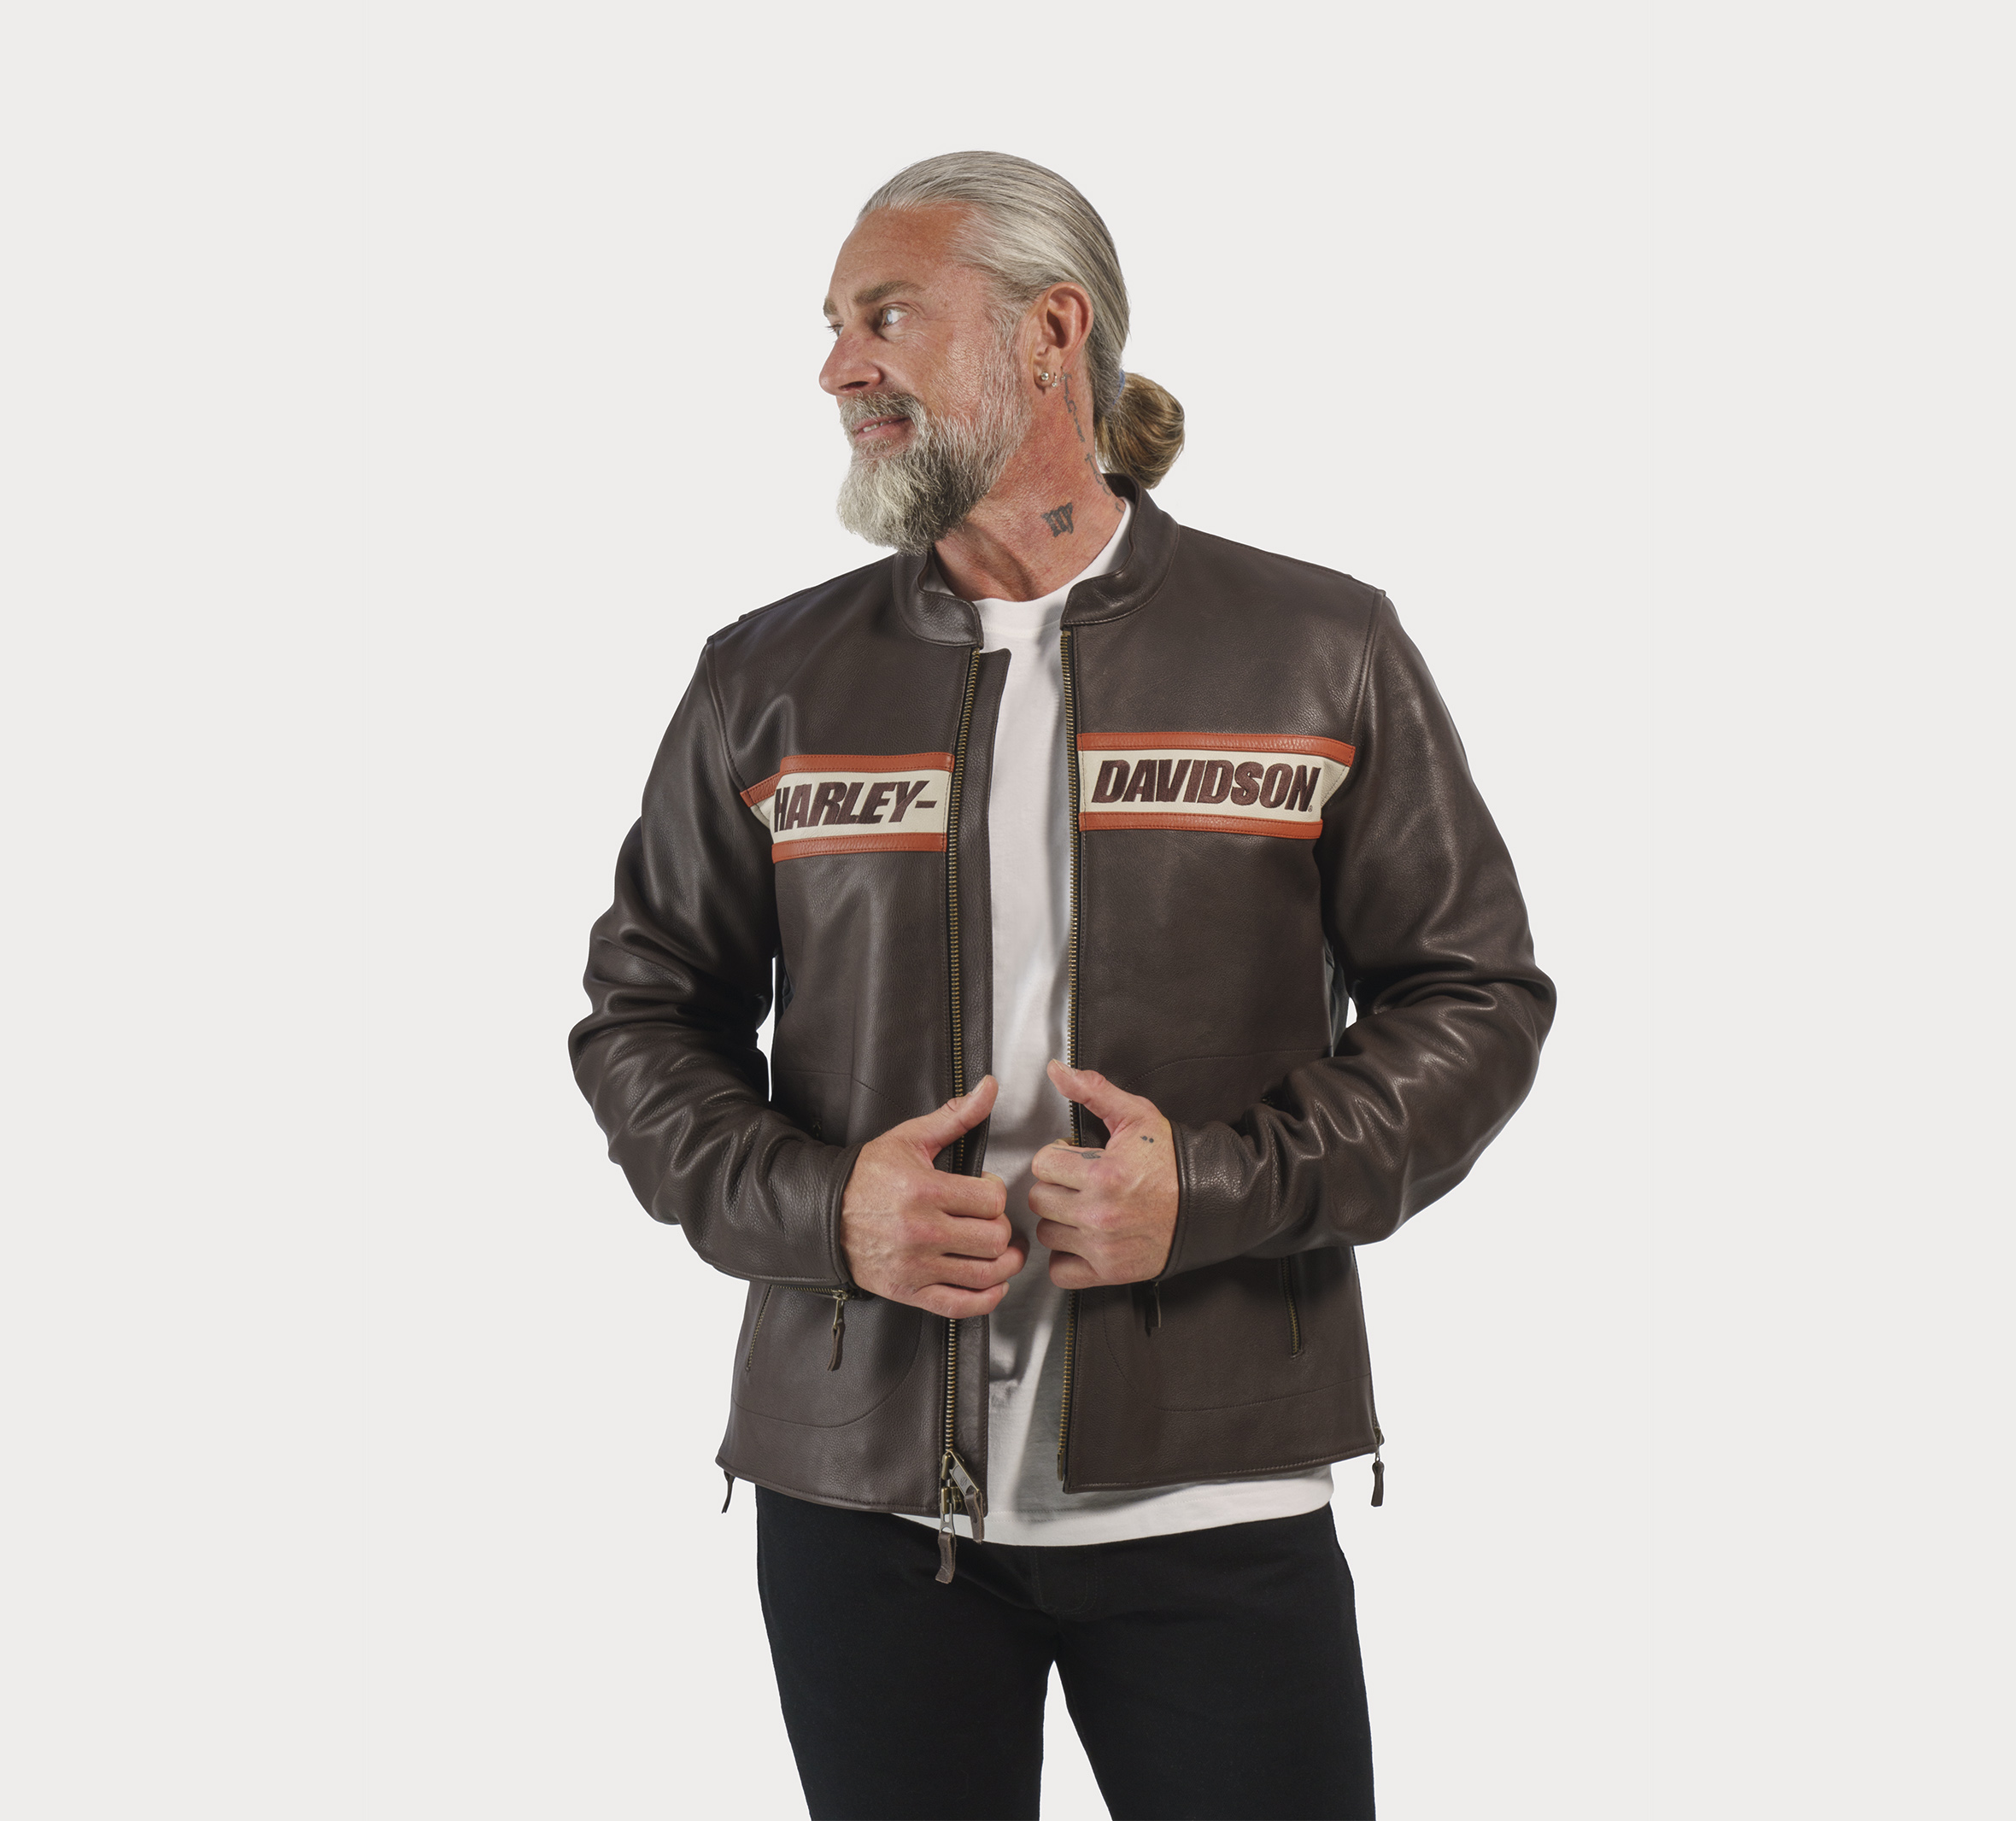 Men's Victory Lane II Leather Jacket - Java | Harley-Davidson CA